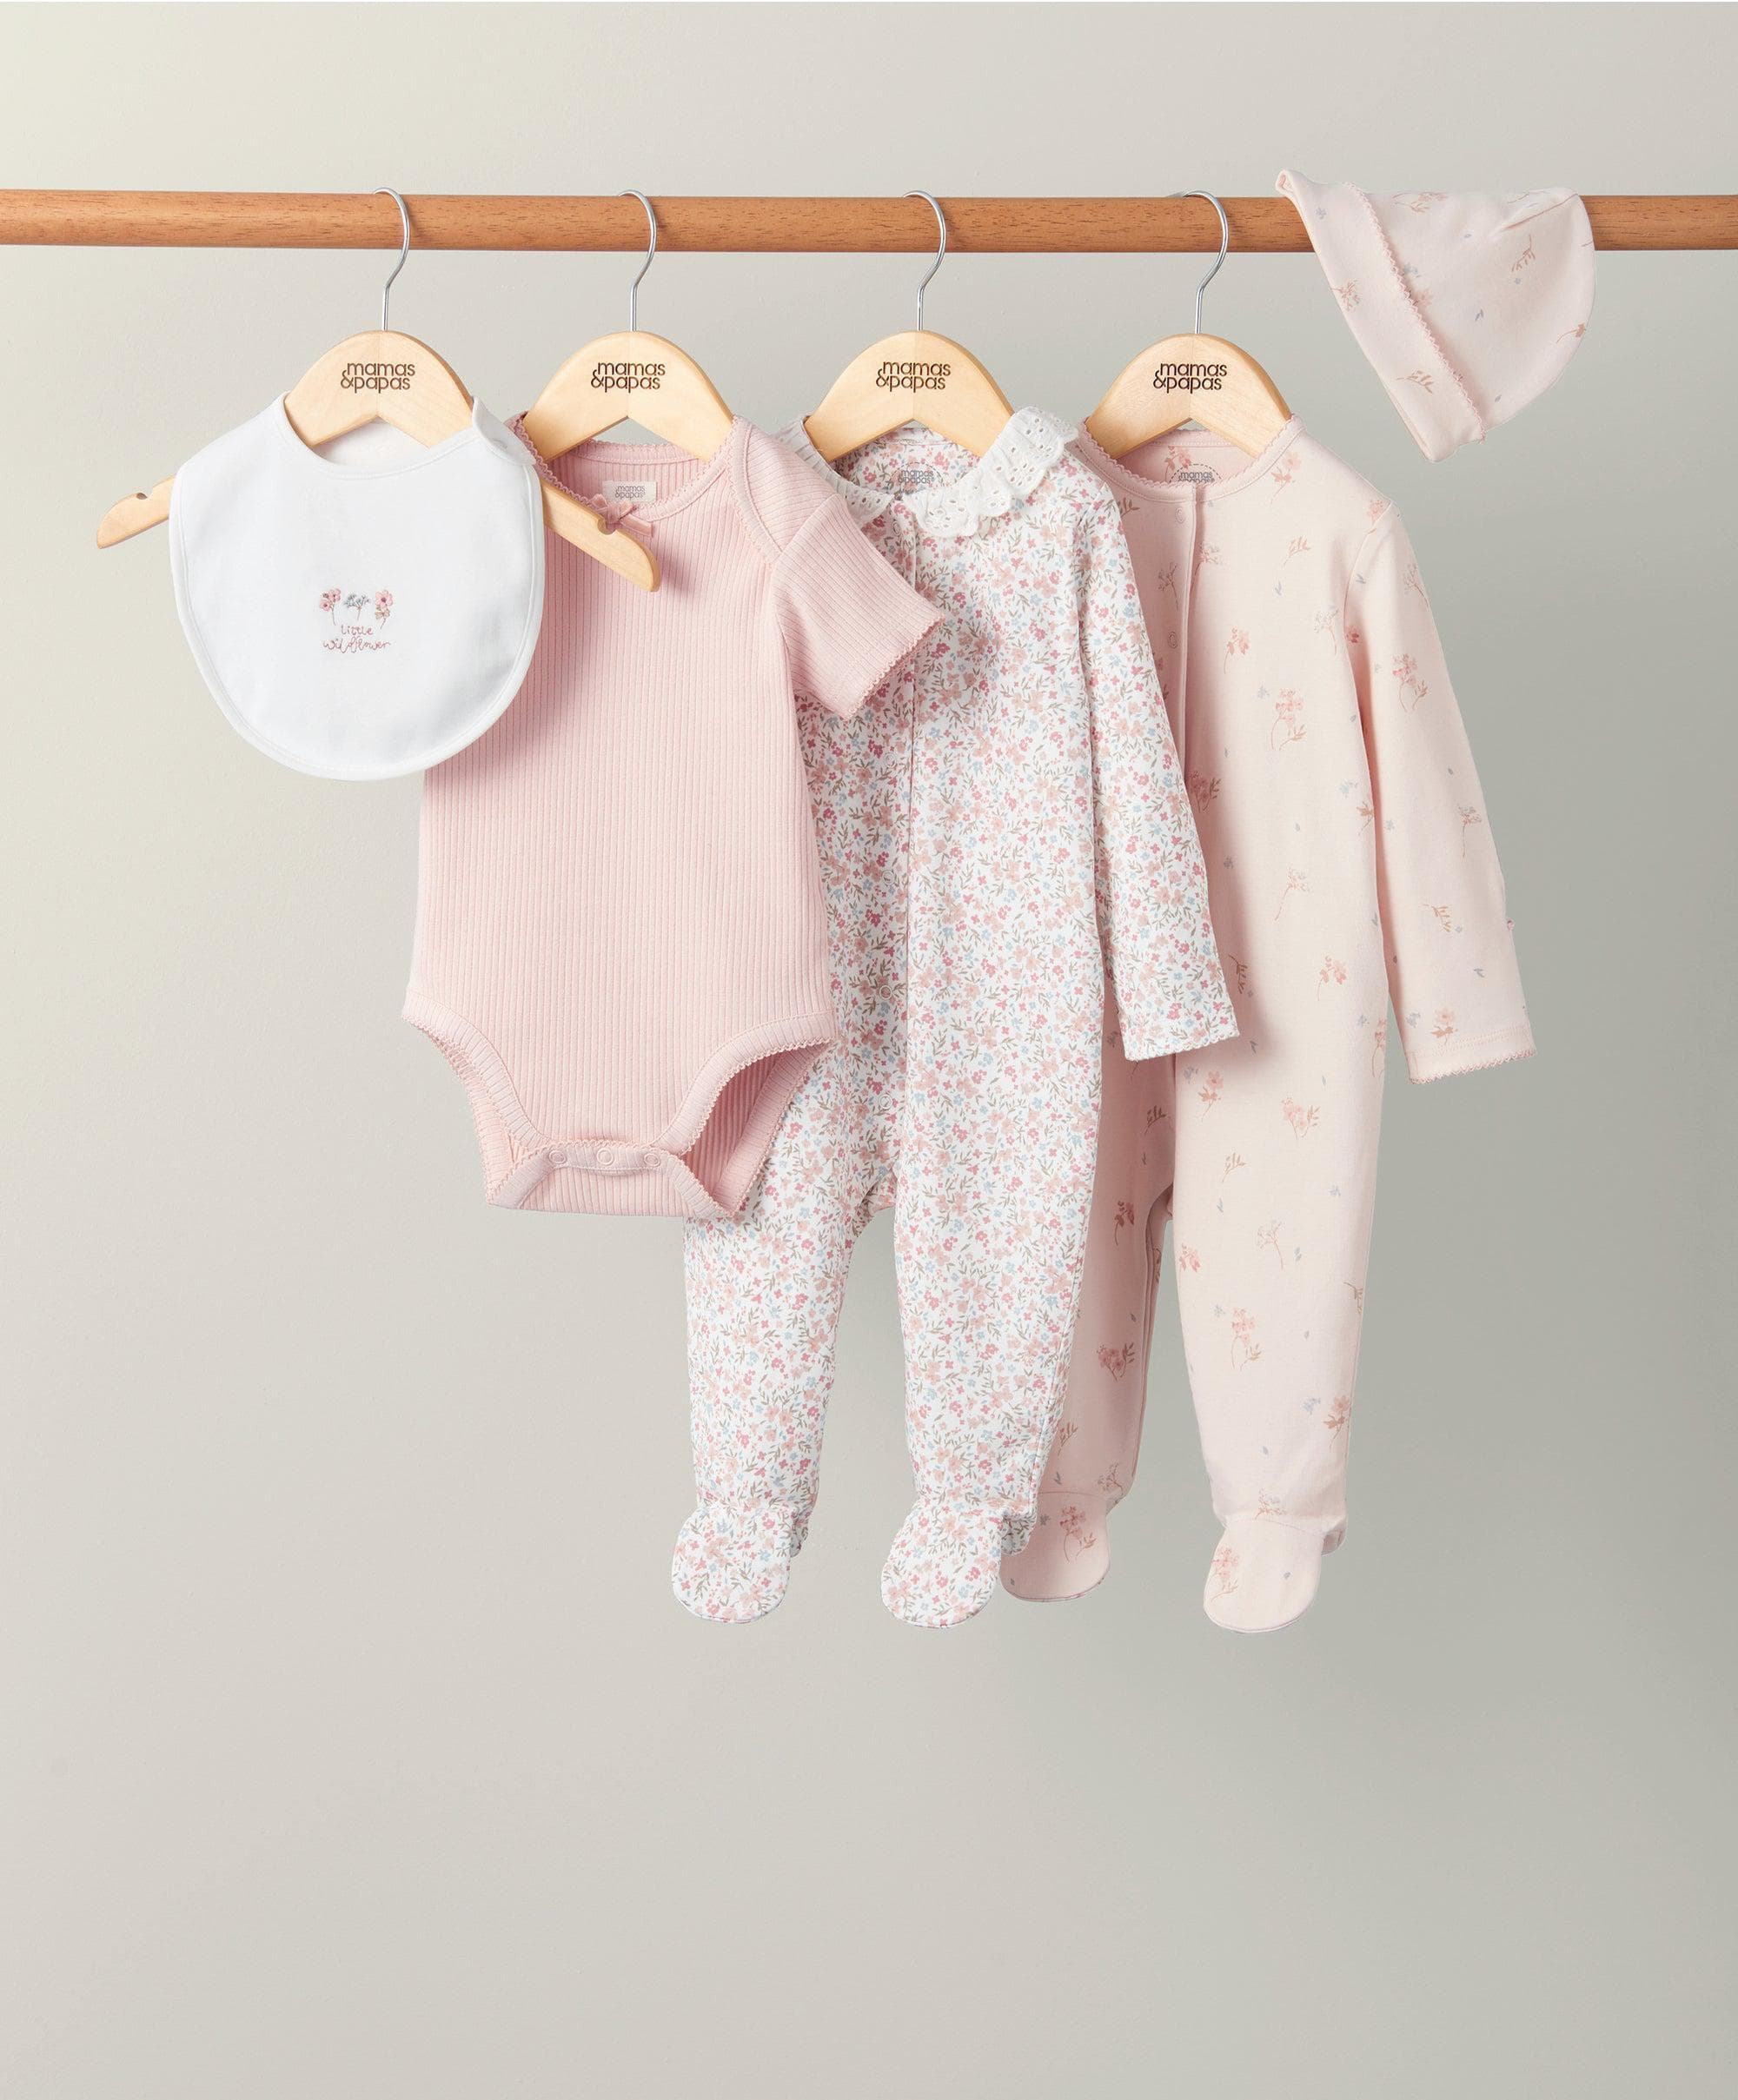 Mamas & Papas Newborn Clothing Set (5 Piece) - Floral  - 6-9 Months